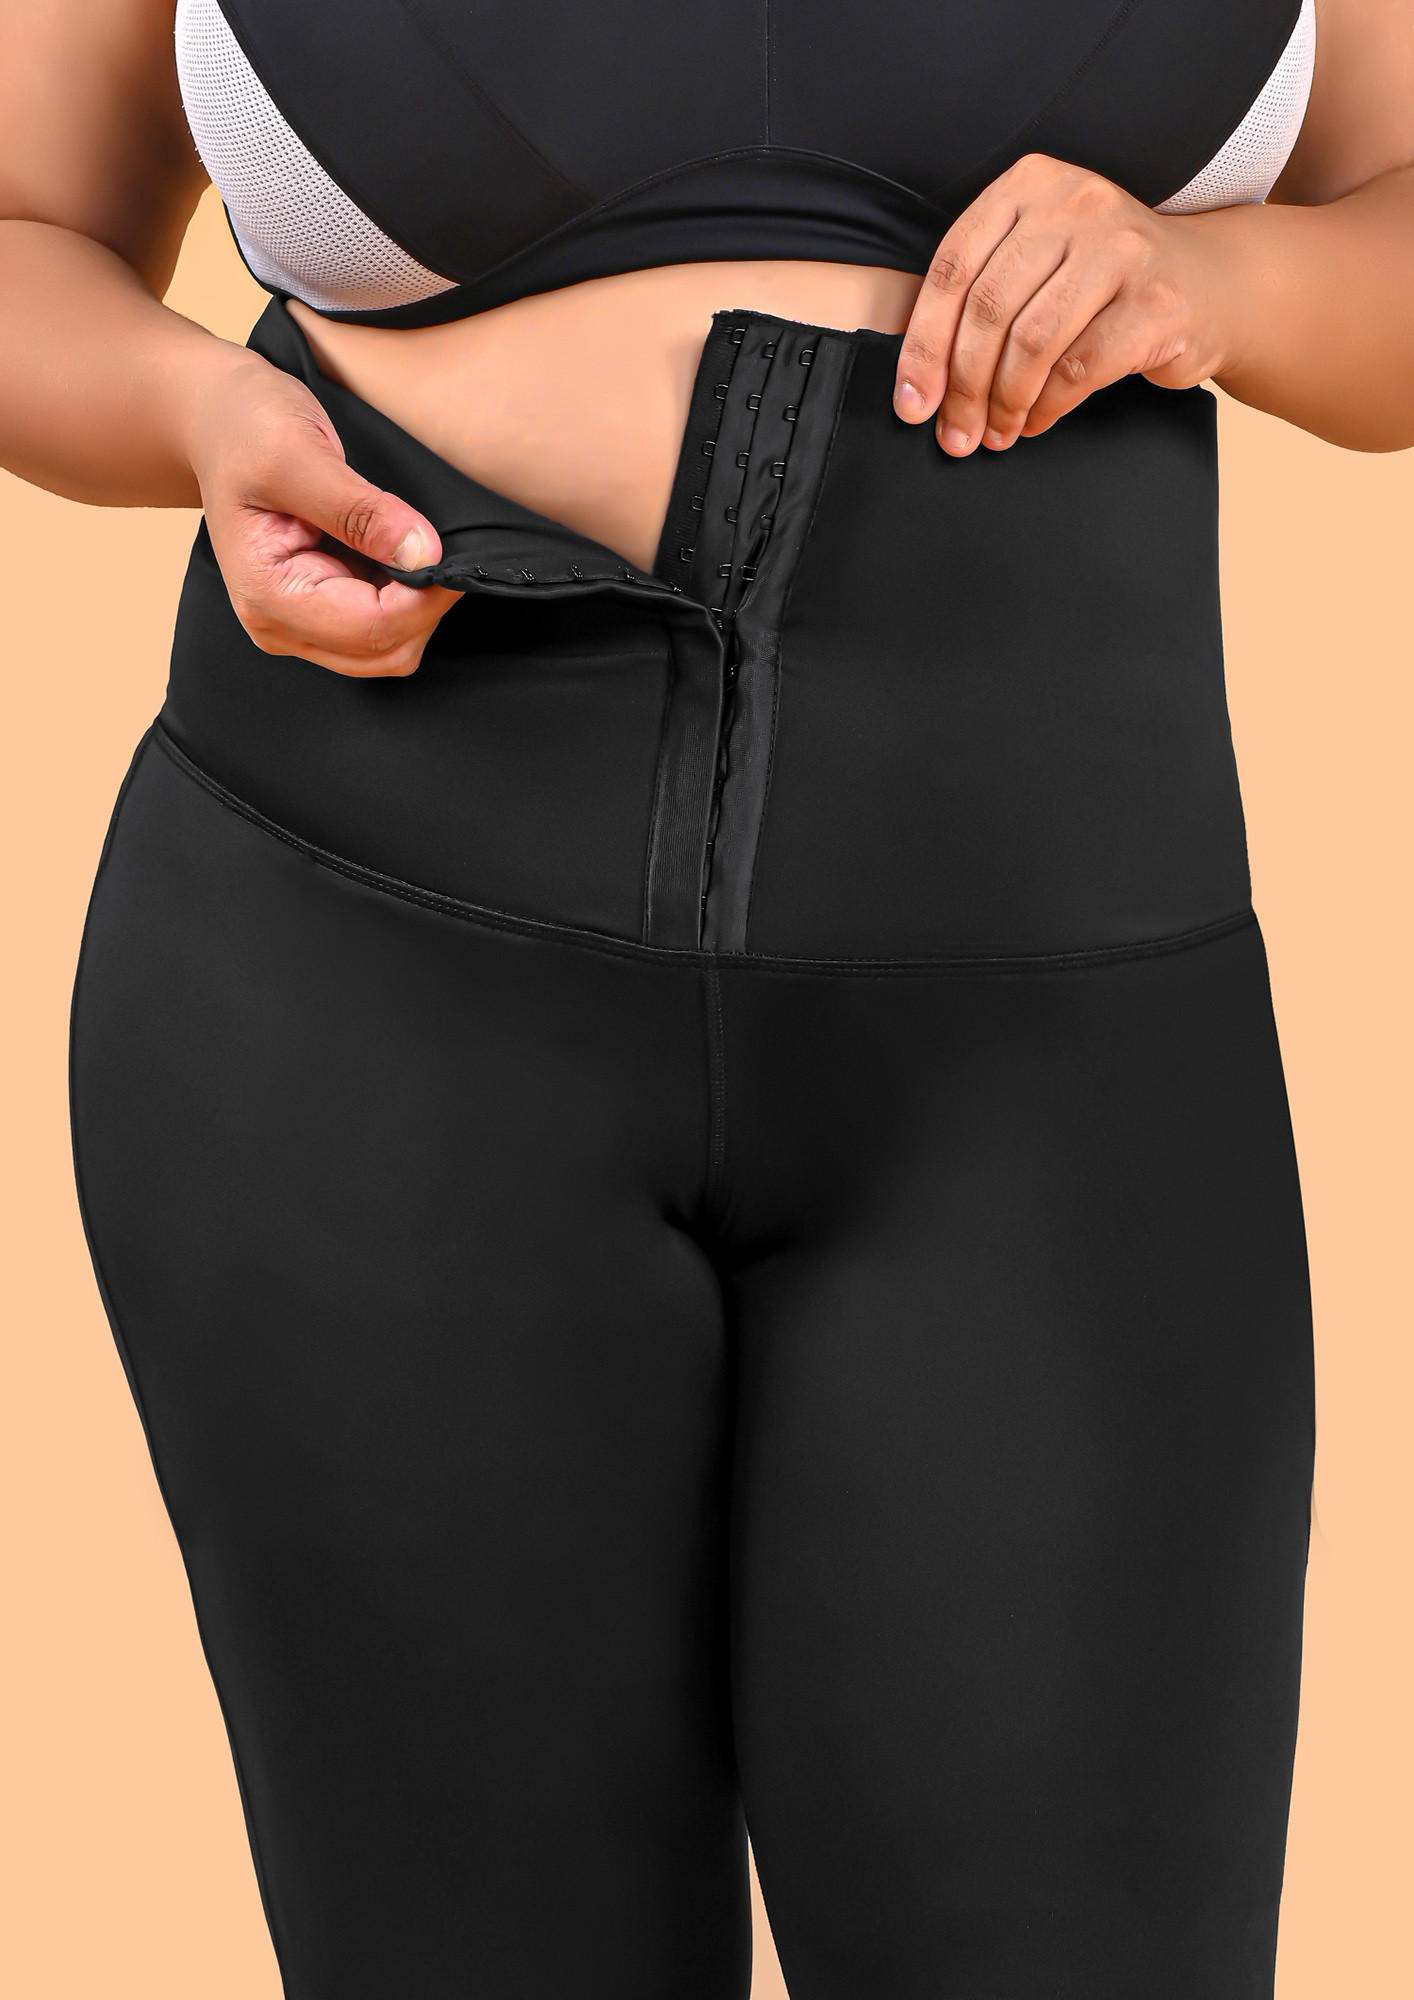 Buy ASNUG High Waist Yoga Pants for Women Tummy Control Workout